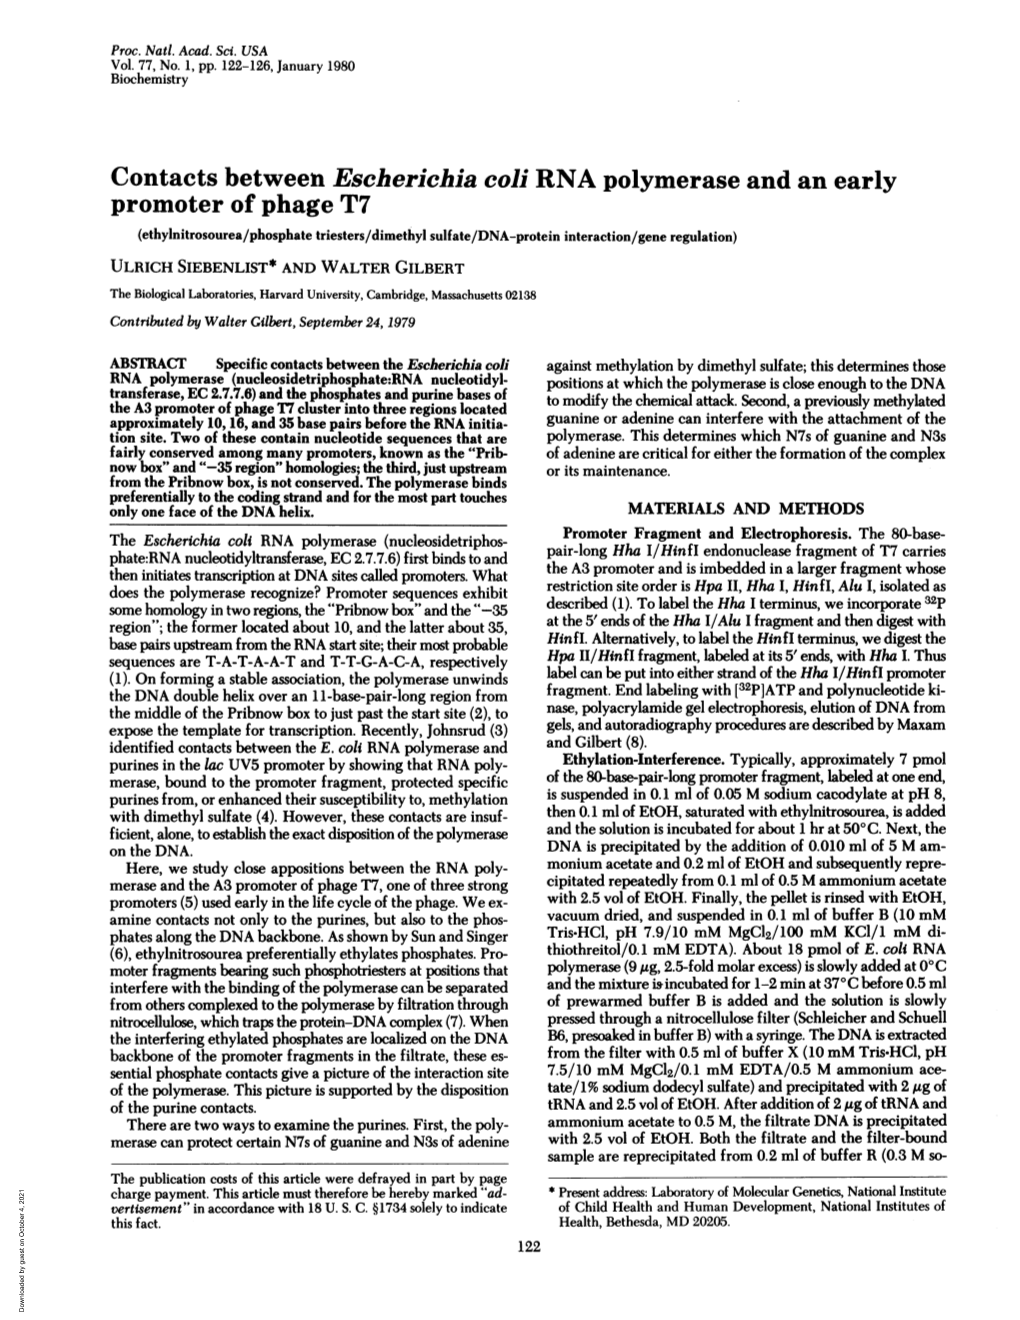 Contacts Between Escherichia Coli RNA Polymerase and An